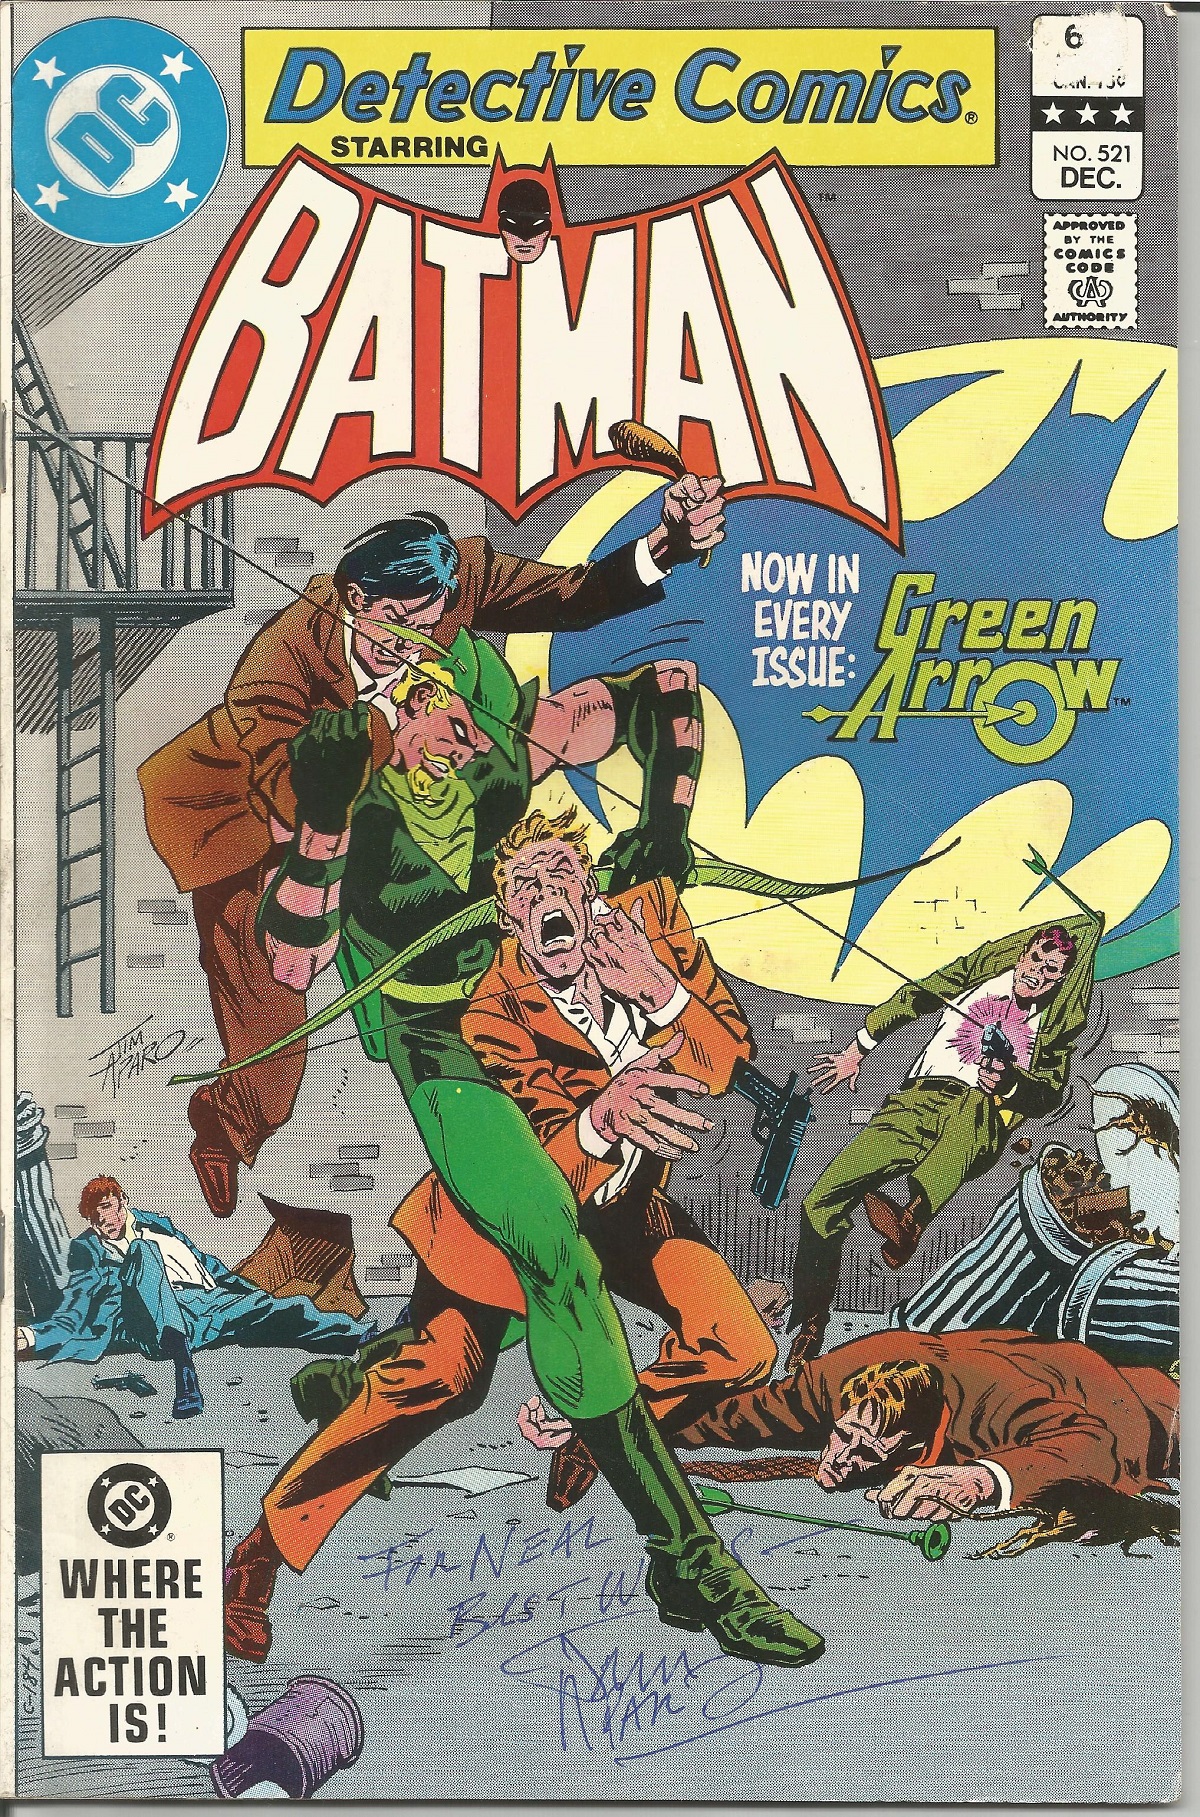 DC Comic Detective Comics Batman No 521 Dec signed on the cover by Jim Aparo. Good Condition. All